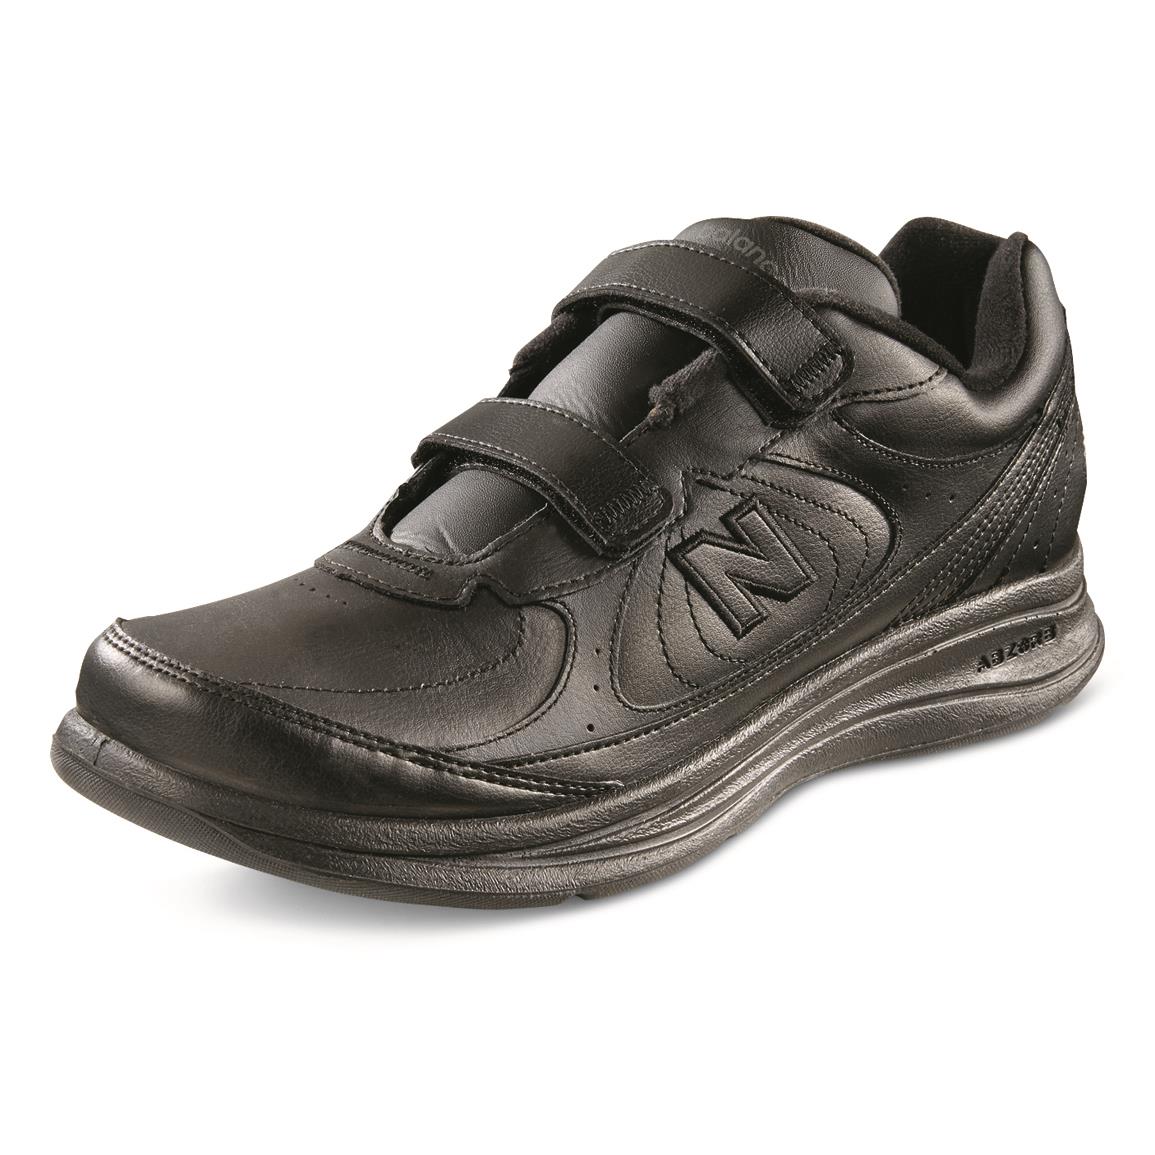 New Balance Men's Hook-and-loop 577 Walking Shoes - 716256, Running ...